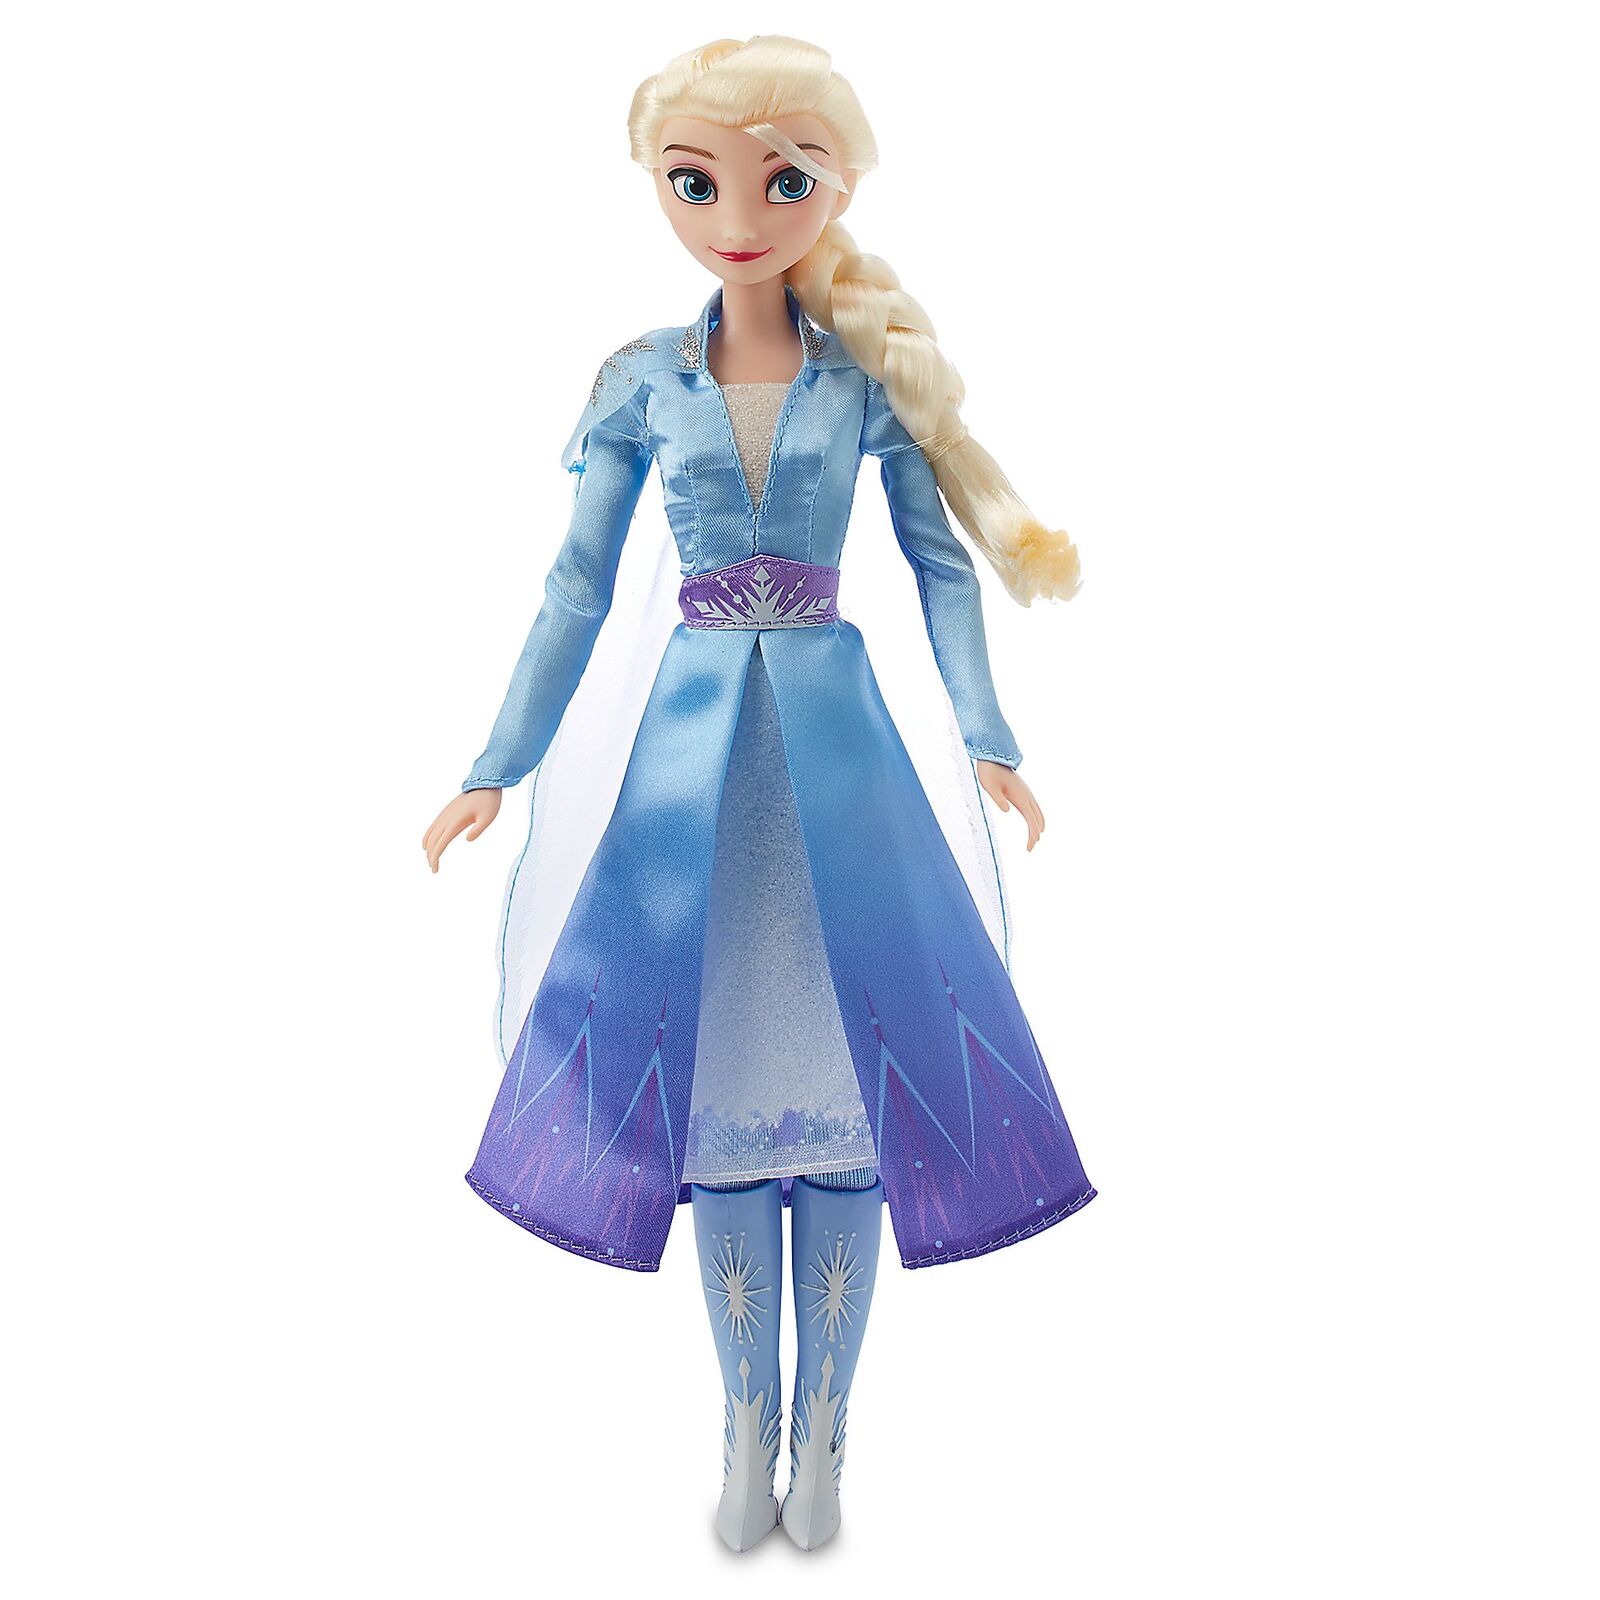 Disney Frozen 2 Elsa Singing Doll